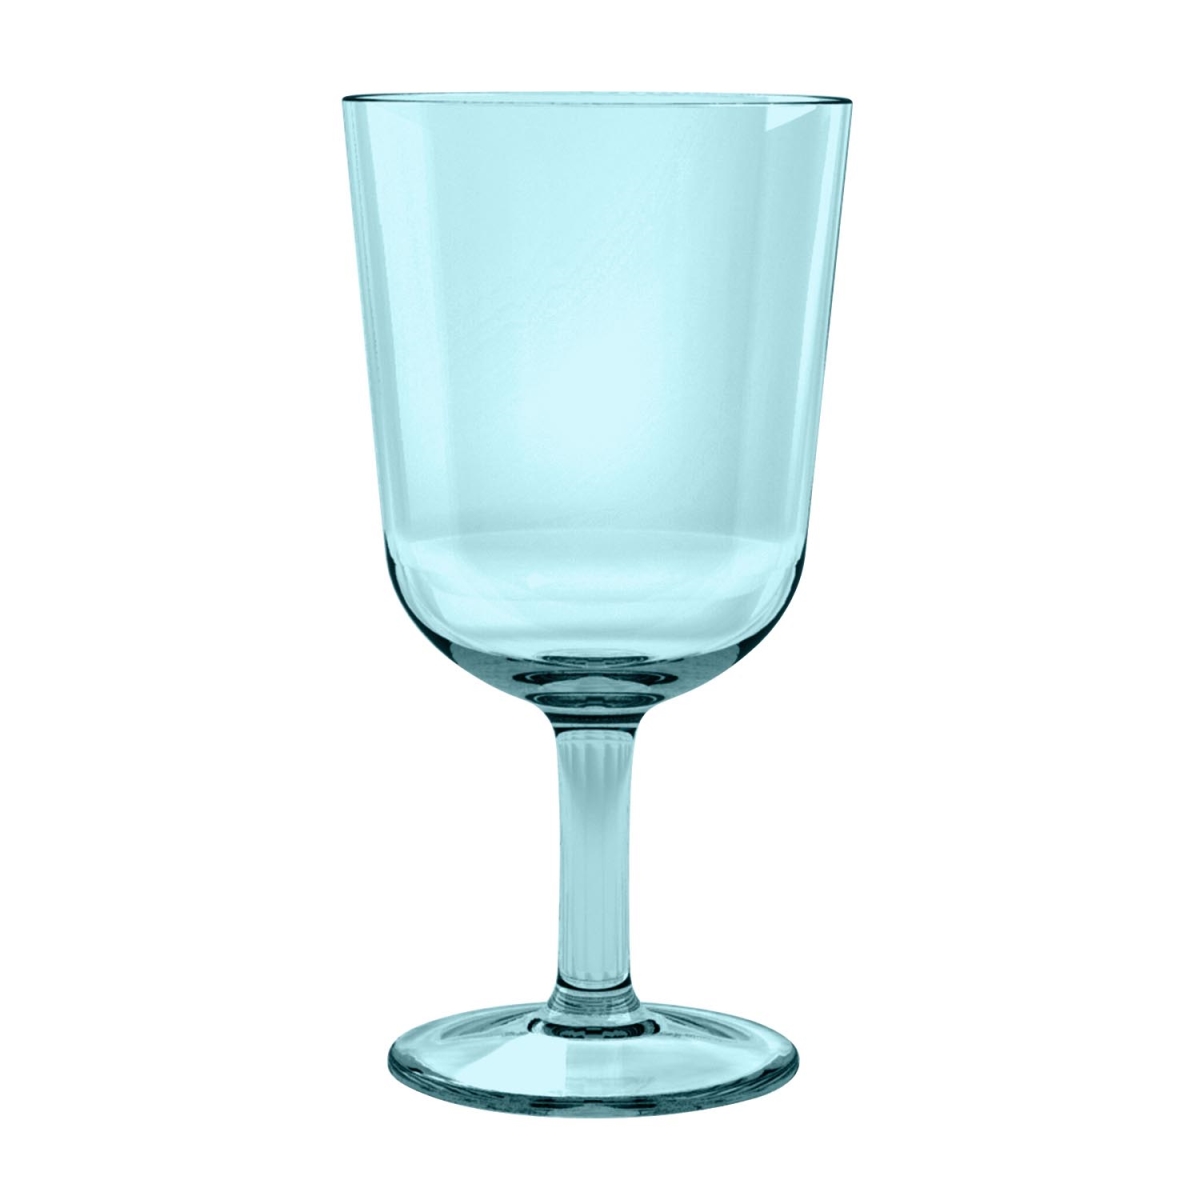 Pspgb160sglt 16 Oz Simple Wine Glass, Set Of 6 - Aqua